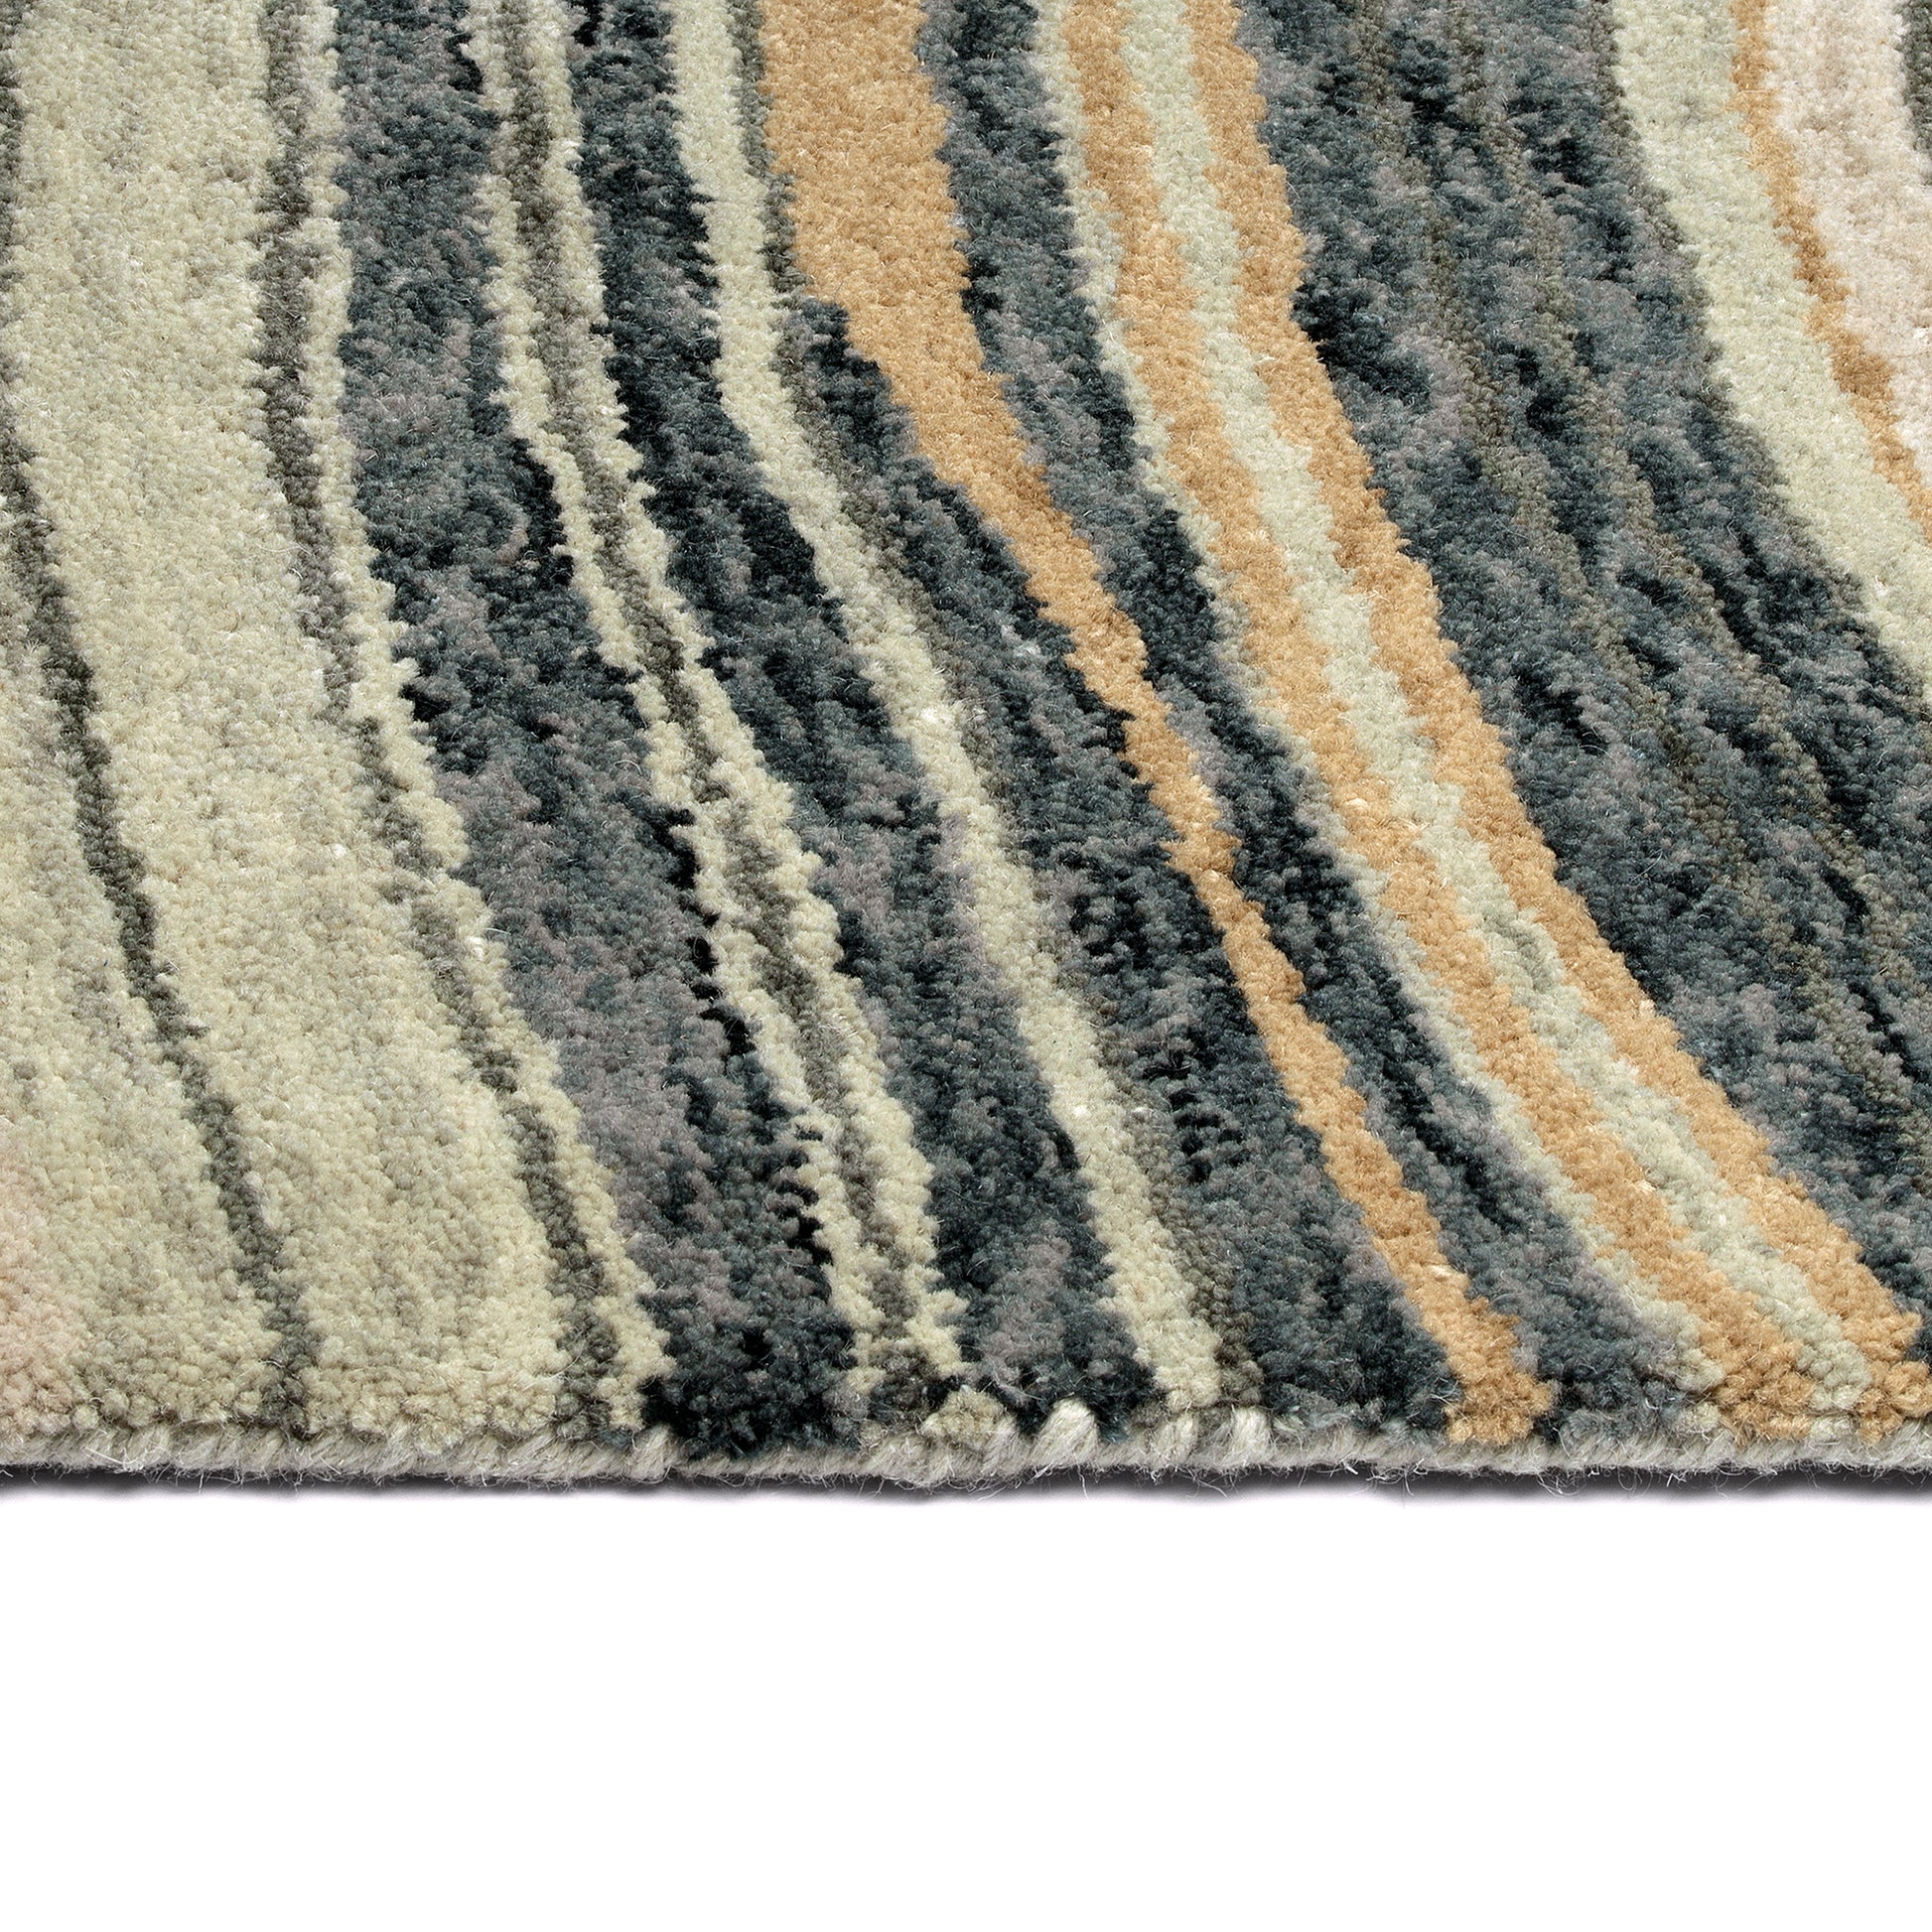 Kaleen Marble Mbl11-86 Multi, Sage, Sand, Charcoal Area Rug